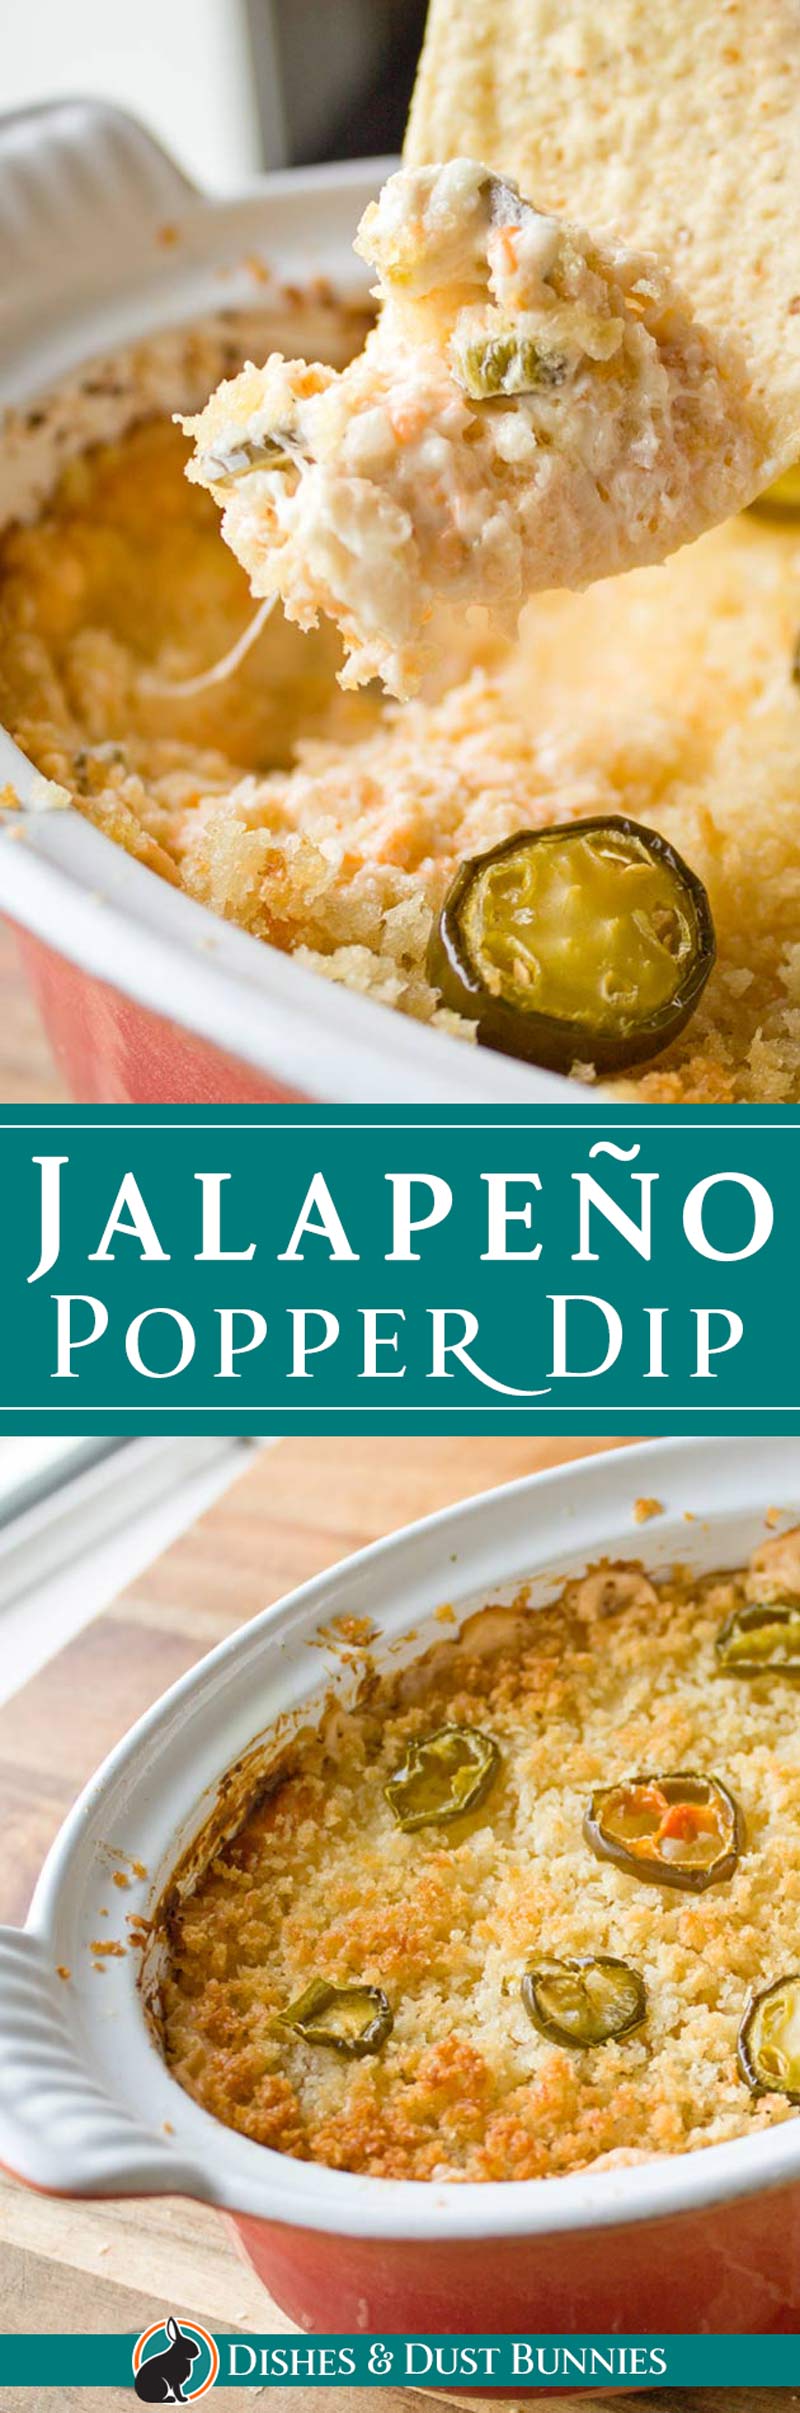 Jalapeno Popper Dip from dishesanddustbunnies.com